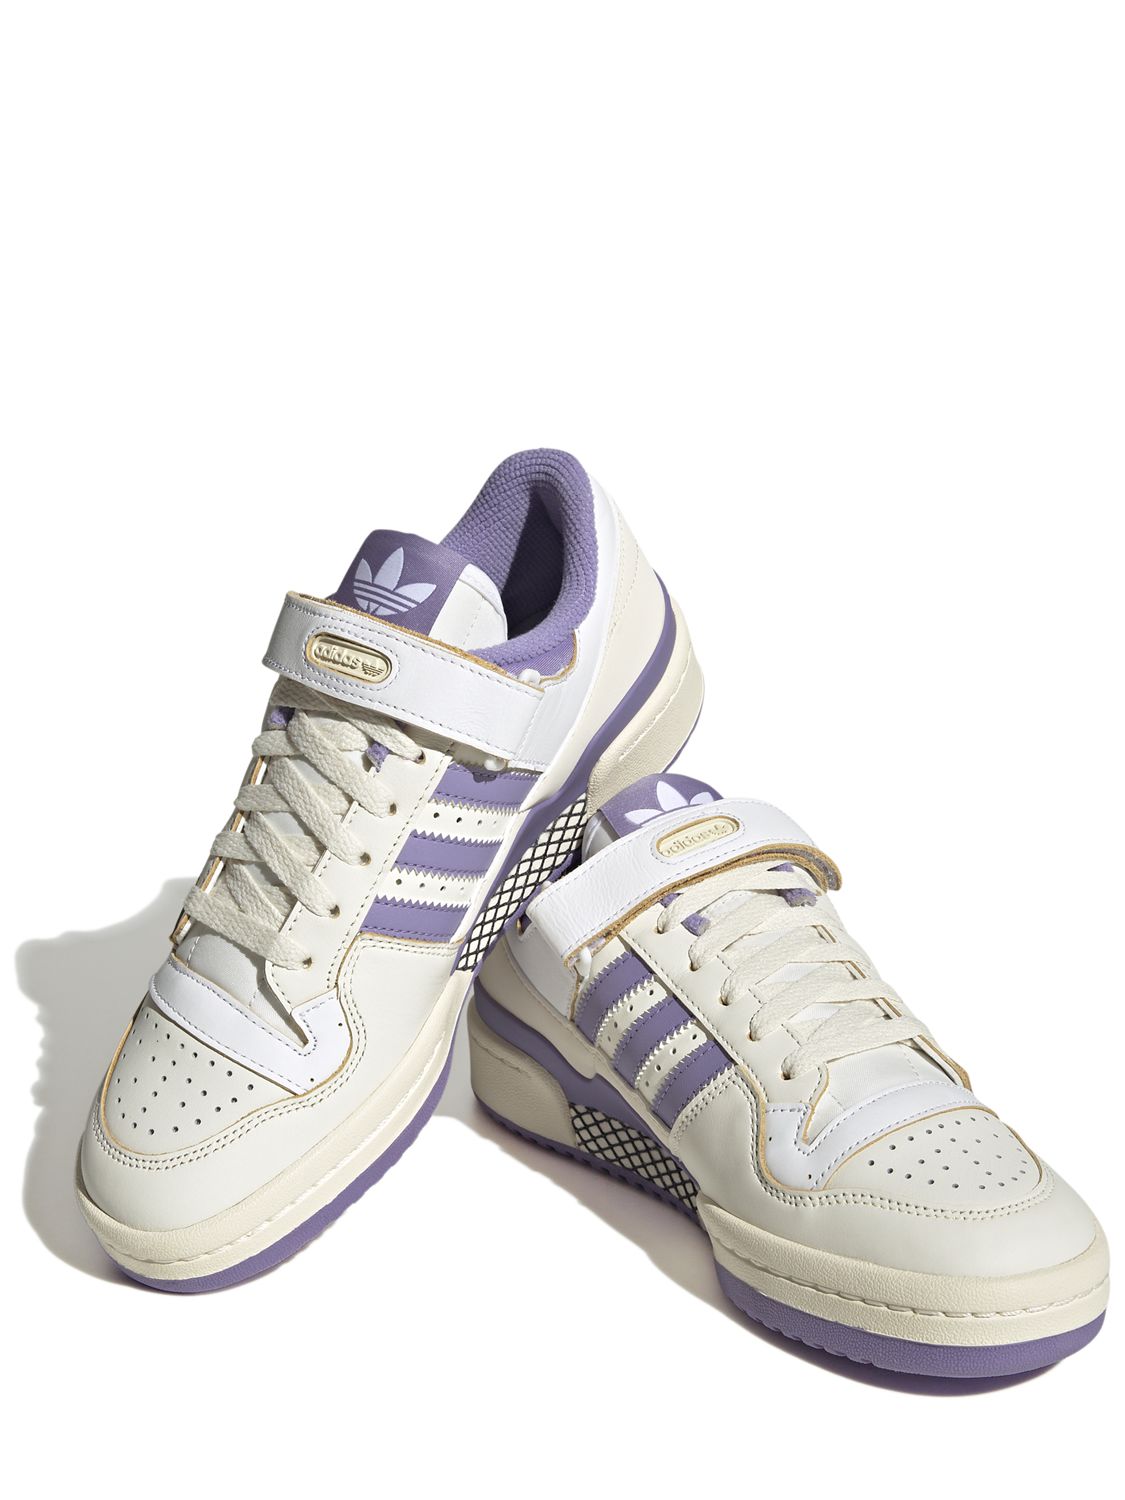 Adidas Originals Forum 84 Low Sneakers In White | ModeSens